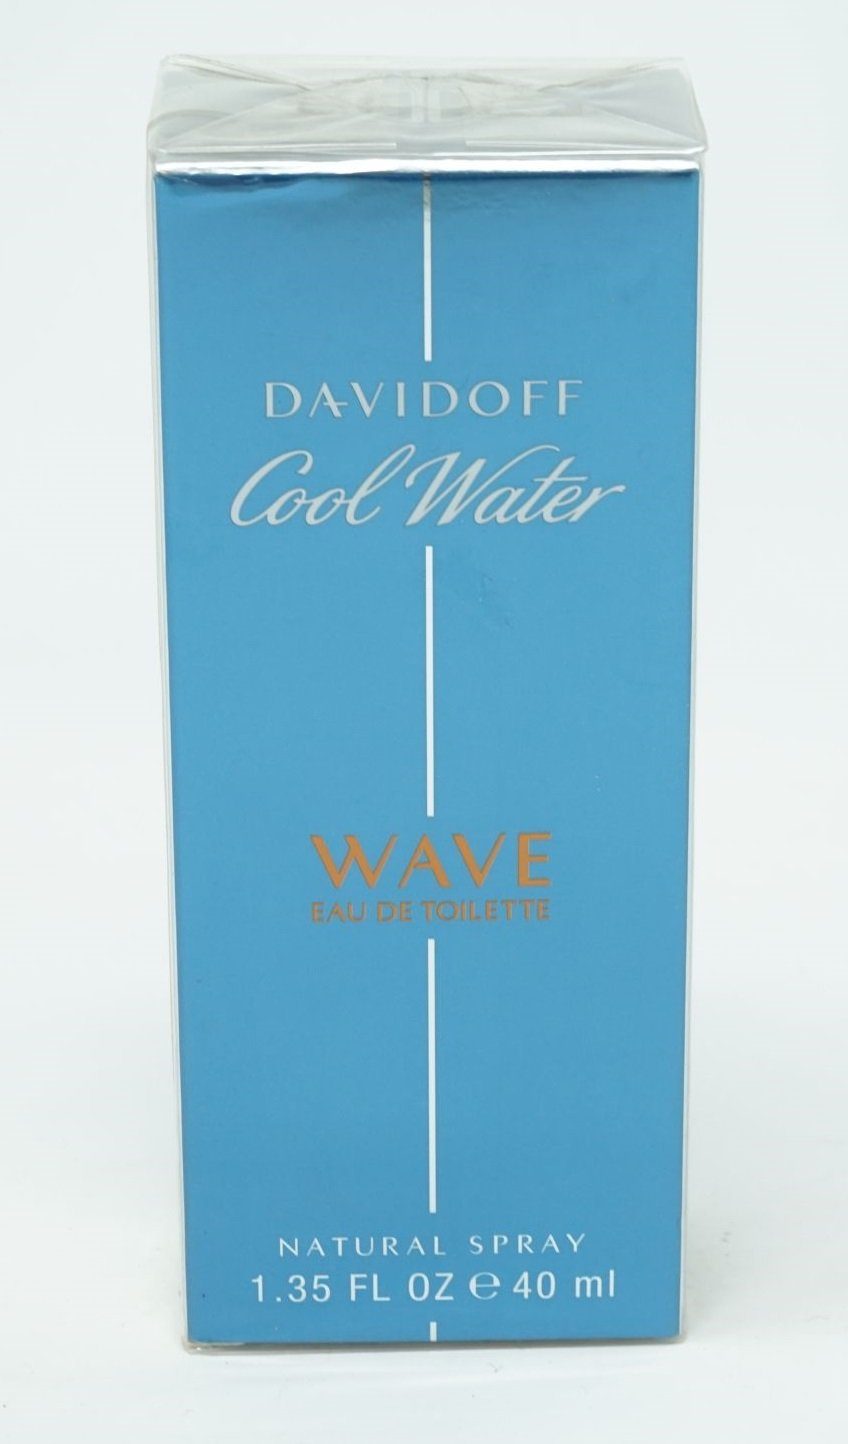 DAVIDOFF Toilette Eau de Eau Spray Toilette Water Cool Wave Davidoff de 40ml